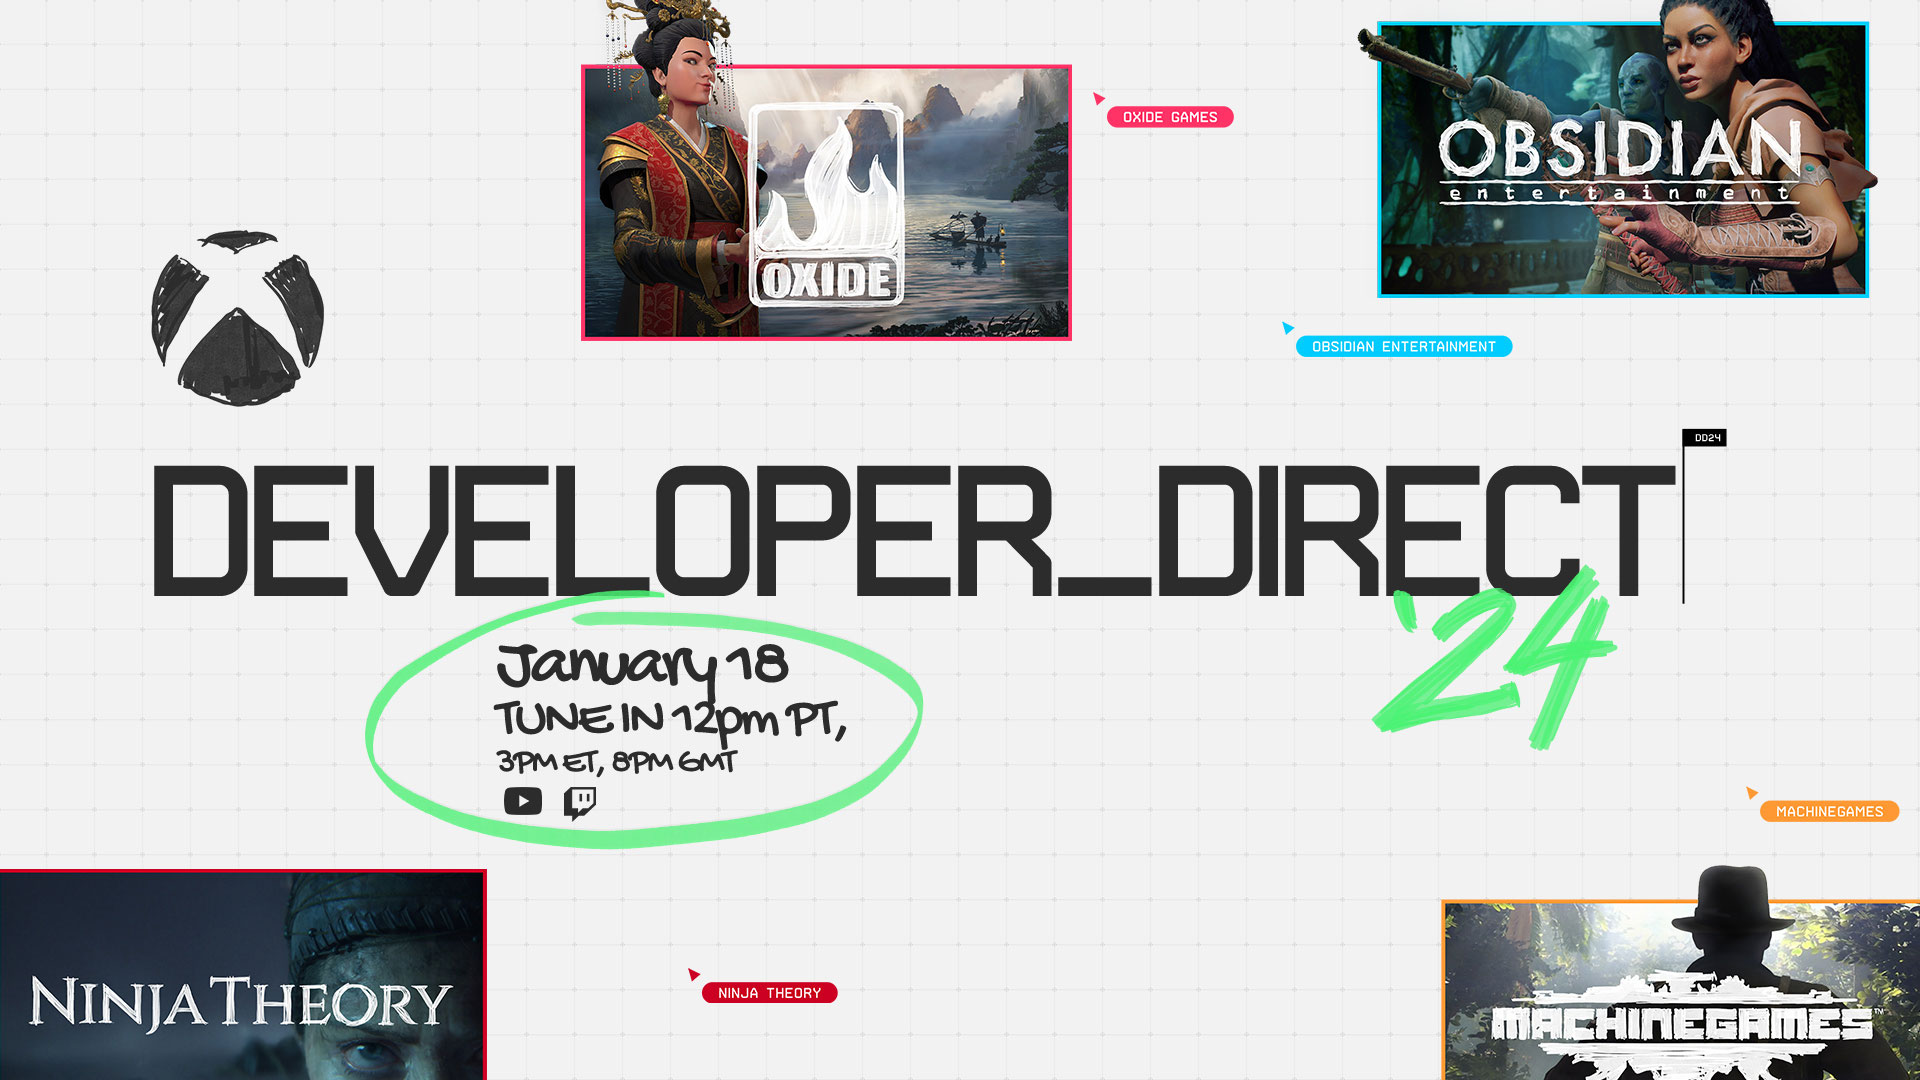 The Xbox Developer_Direct returns on January 18